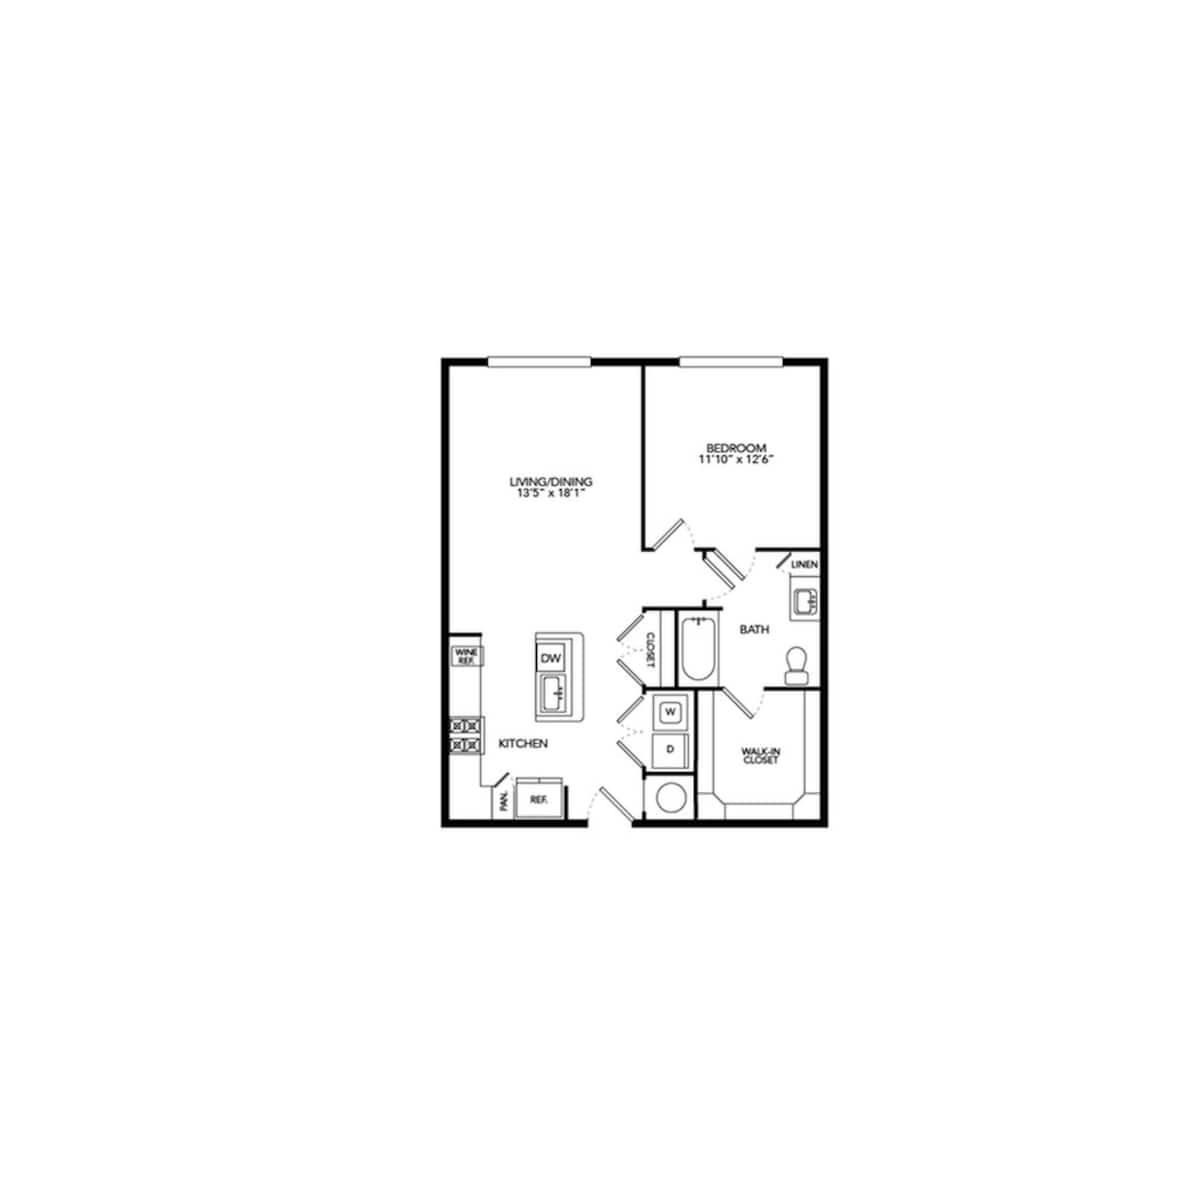 Floorplan diagram for A2-HC, showing 1 bedroom